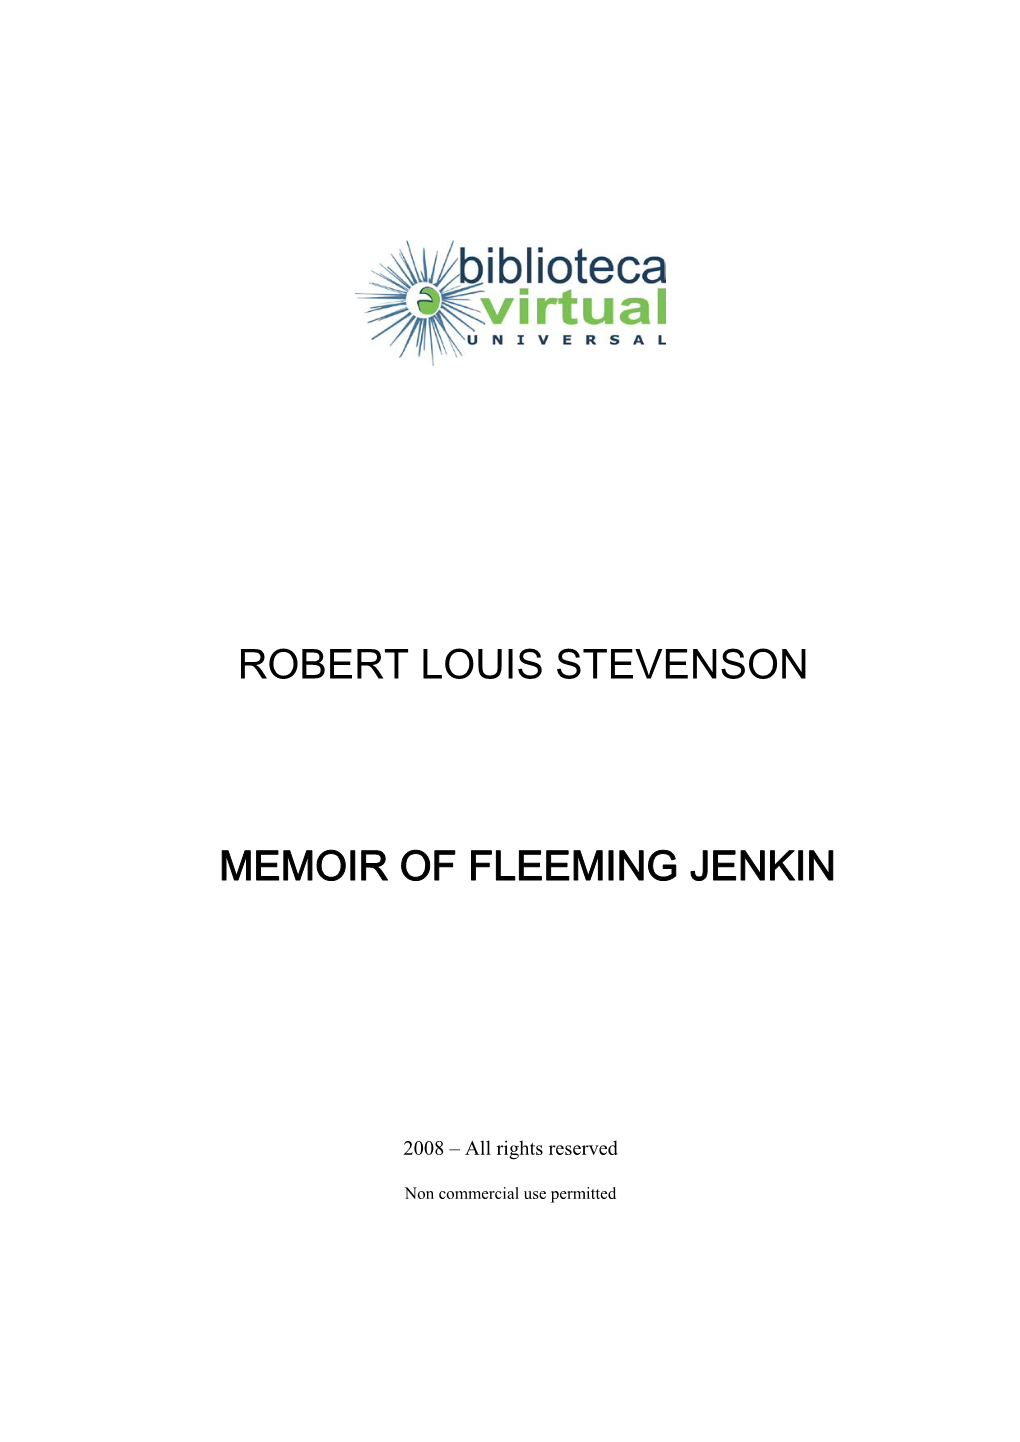 Robert Louis Stevenson Memoir of Fleeming Jenkin